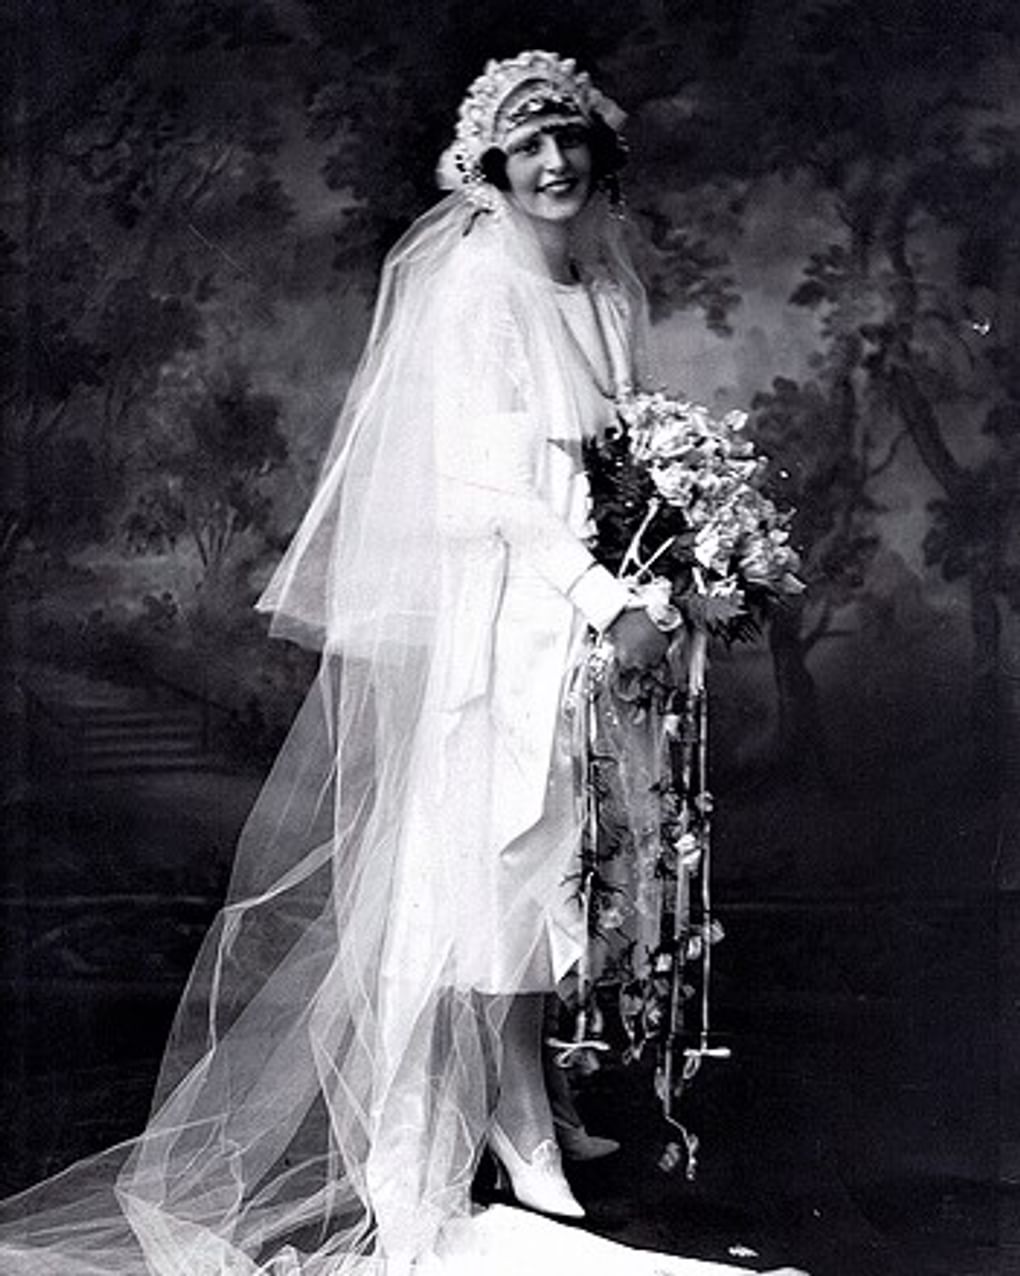 Невеста 1920-х годов. Фотография: <a href="https://commons.wikimedia.org/wiki/File:Bride_1920s.jpg" target="_blank" rel="noopener">commons.wikimedia.org</a>